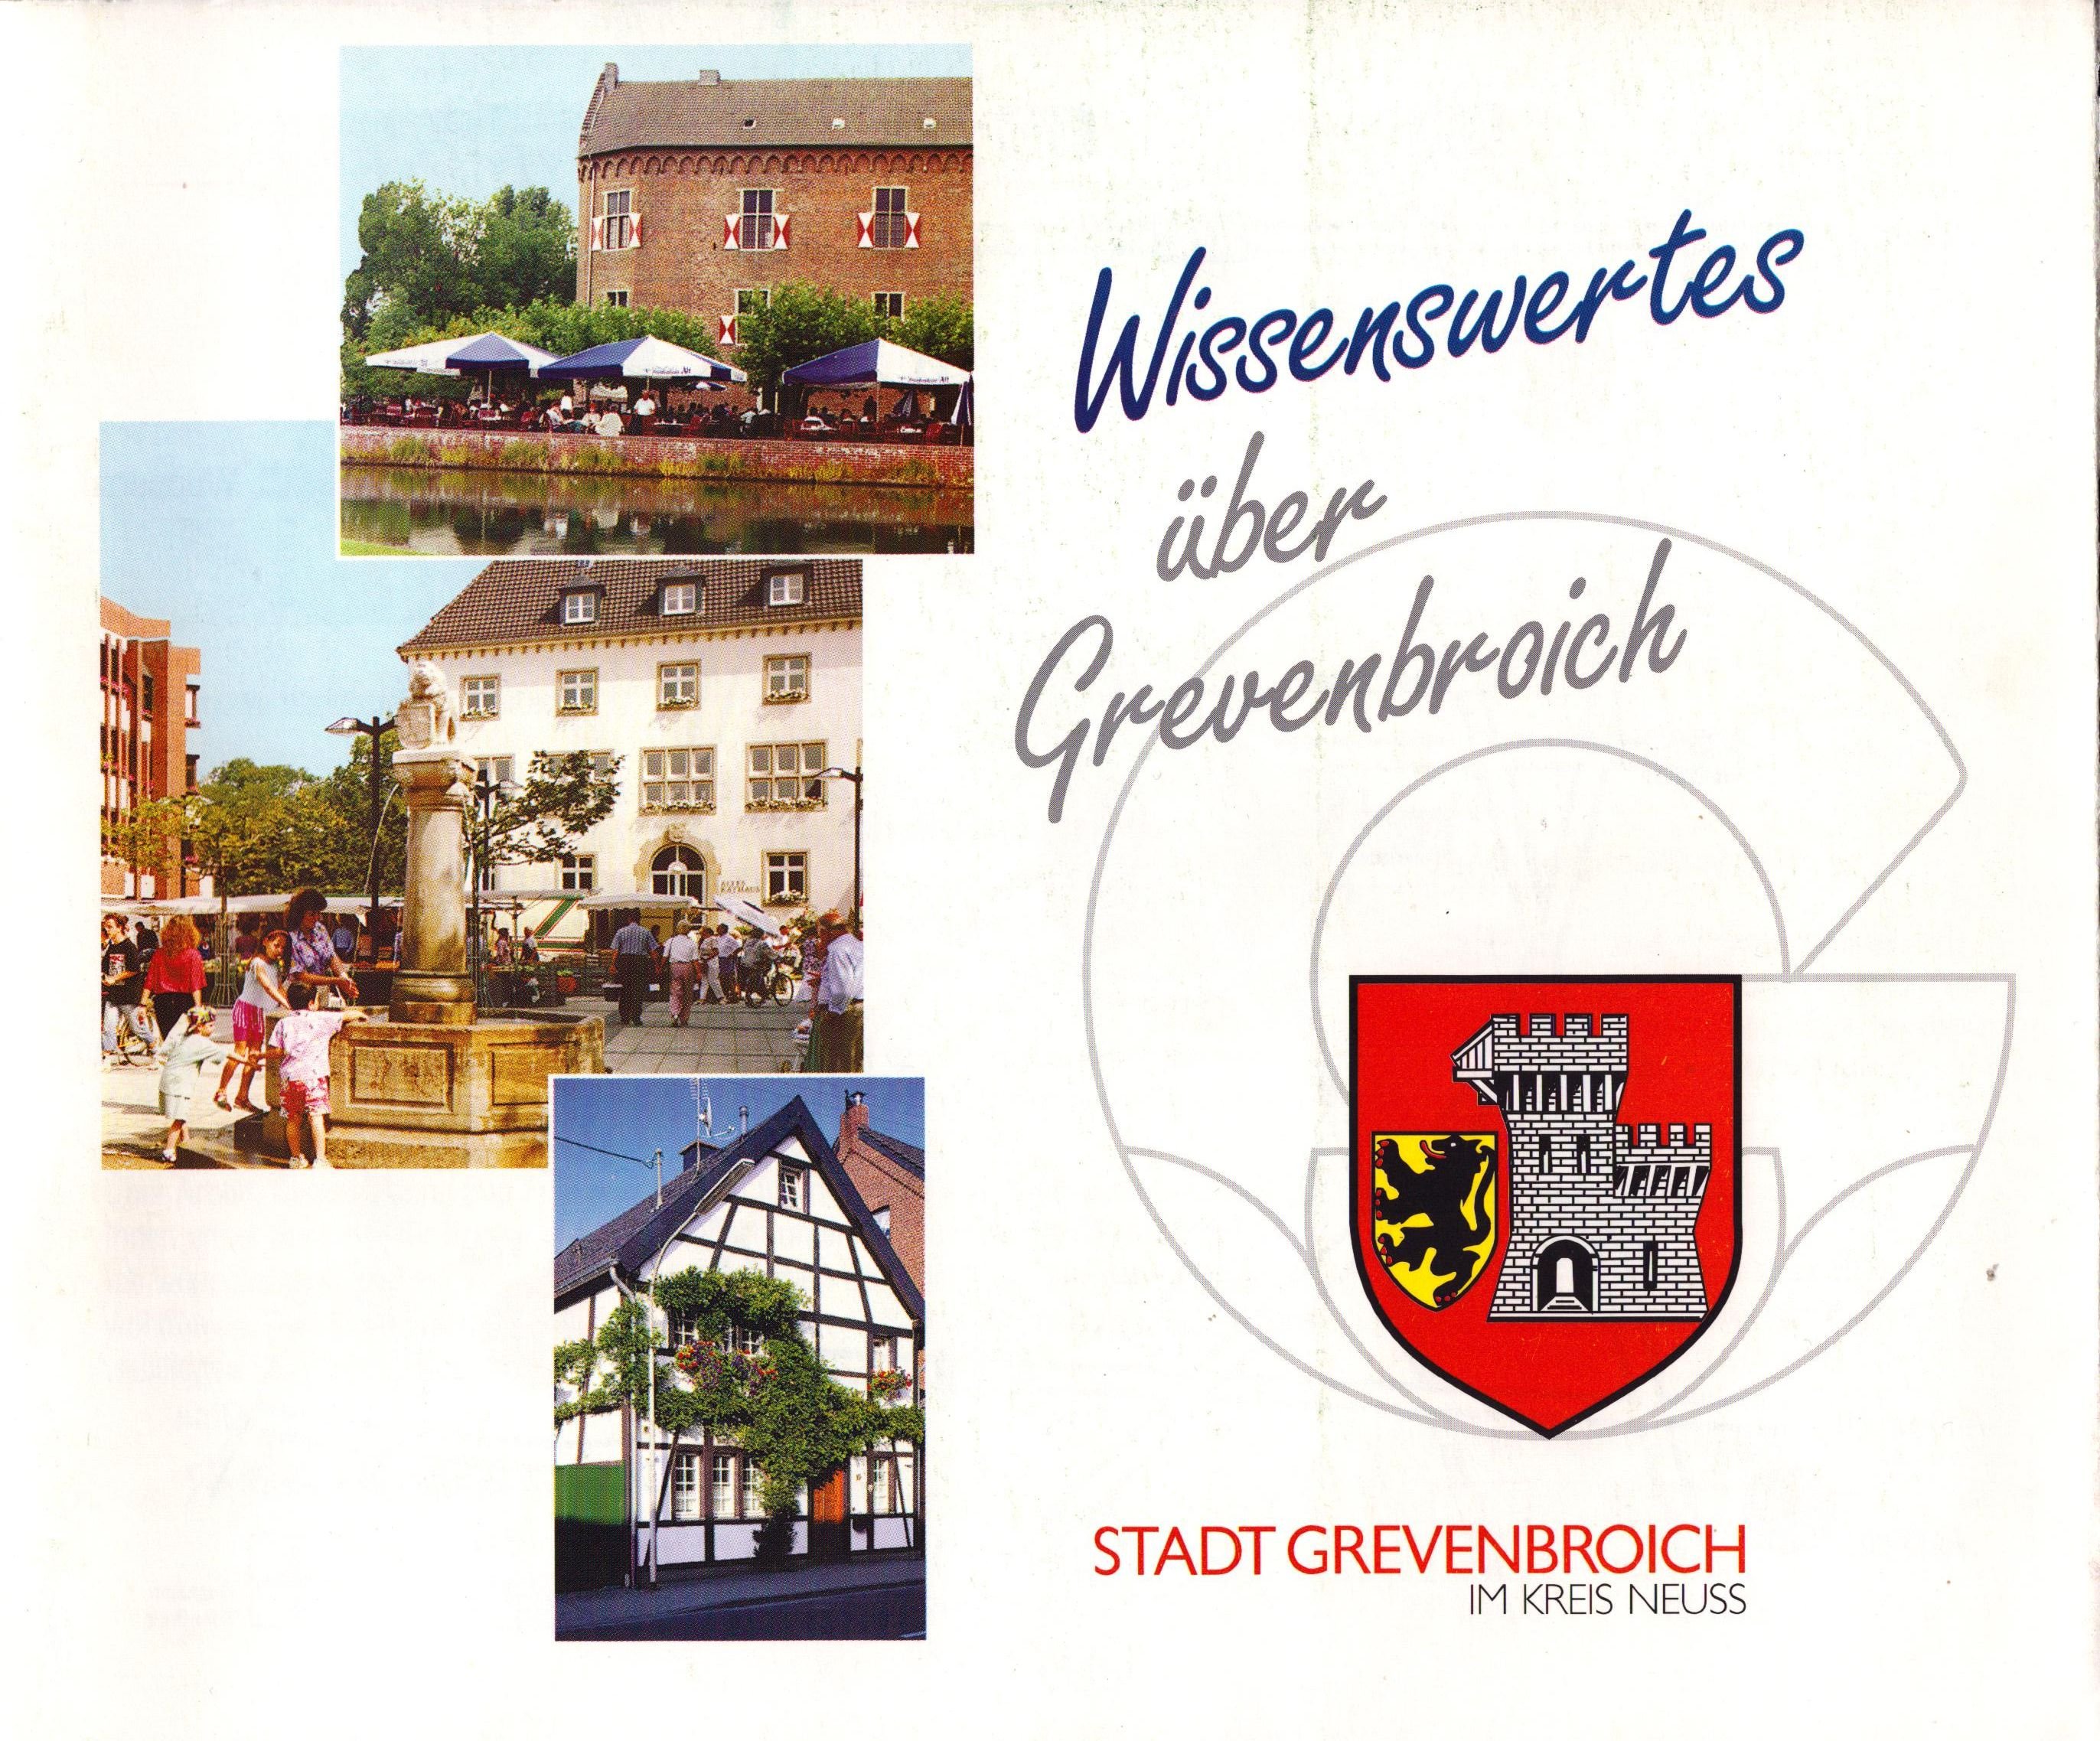 Wissenwertes über Grevenbroich (Archiv SAXONIA-FREIBERG-STIFTUNG CC BY-NC-SA)